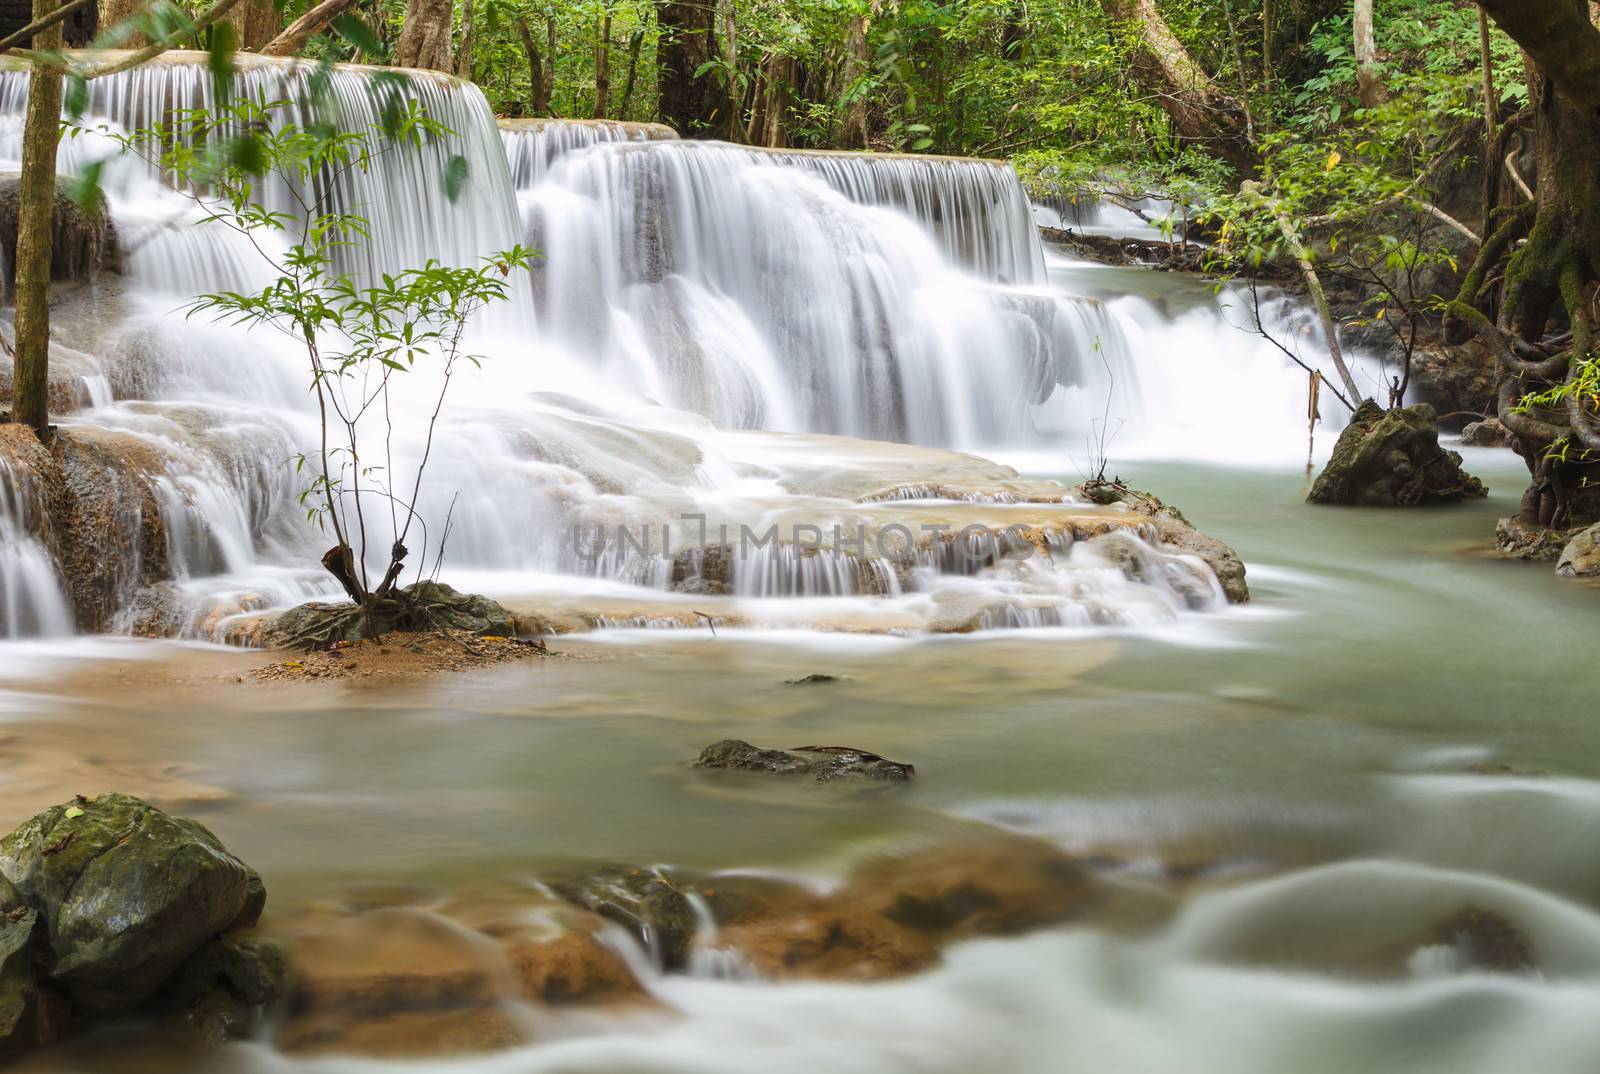 Huai Mae Kamin Waterfall in Kanchanaburi Province, Thailand by panyajampatong